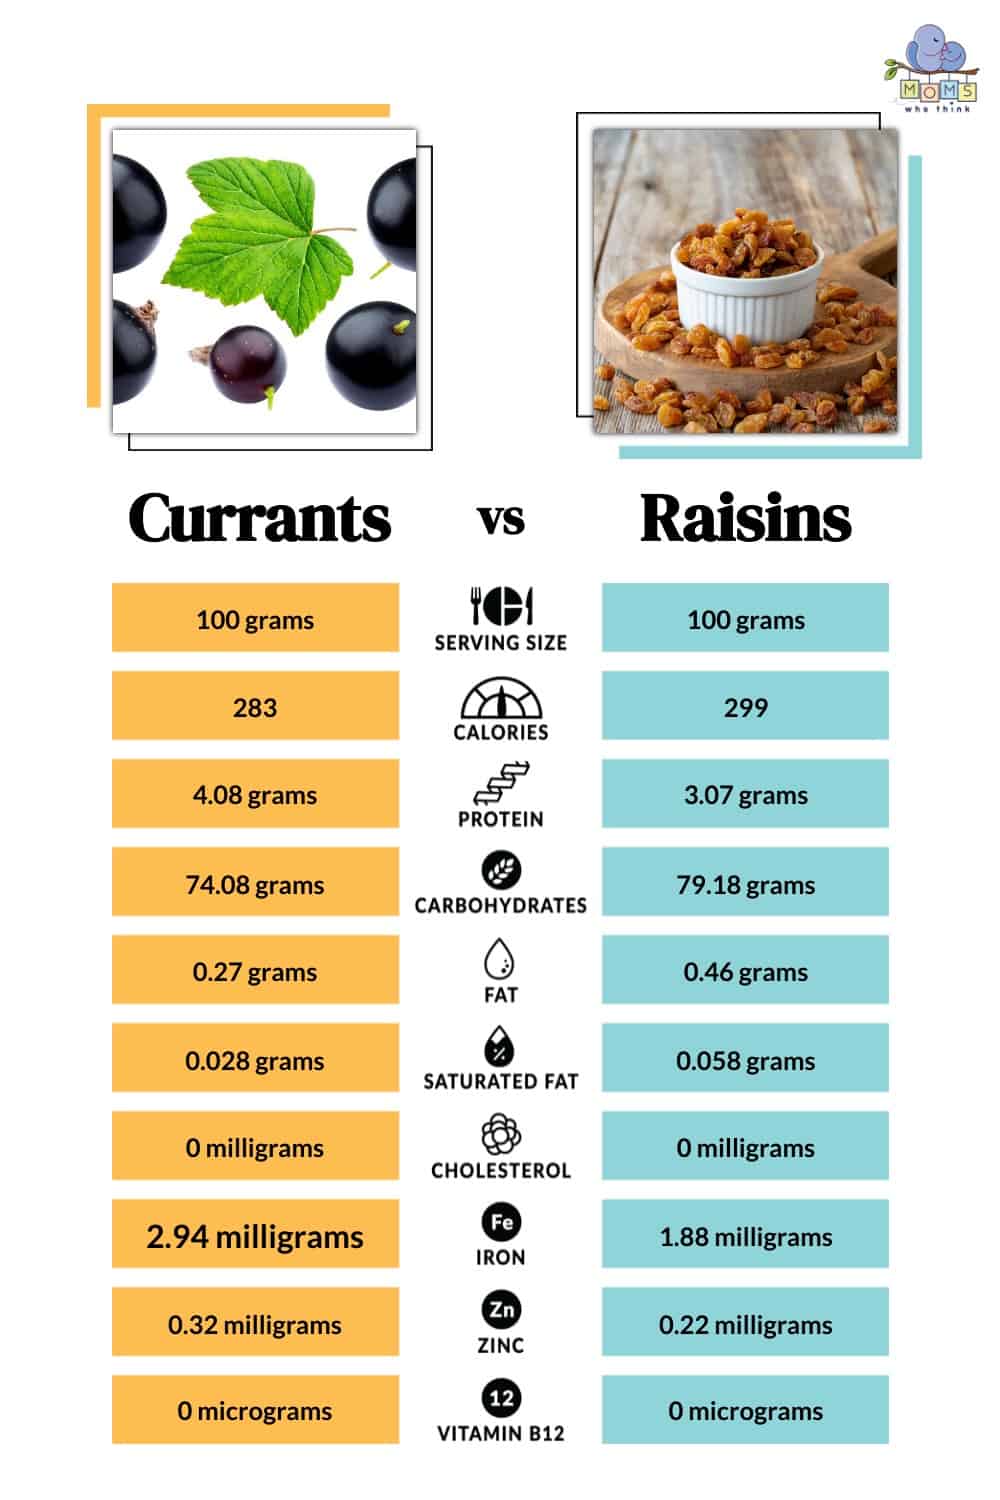 Currants vs Raisins Nutritional Facts